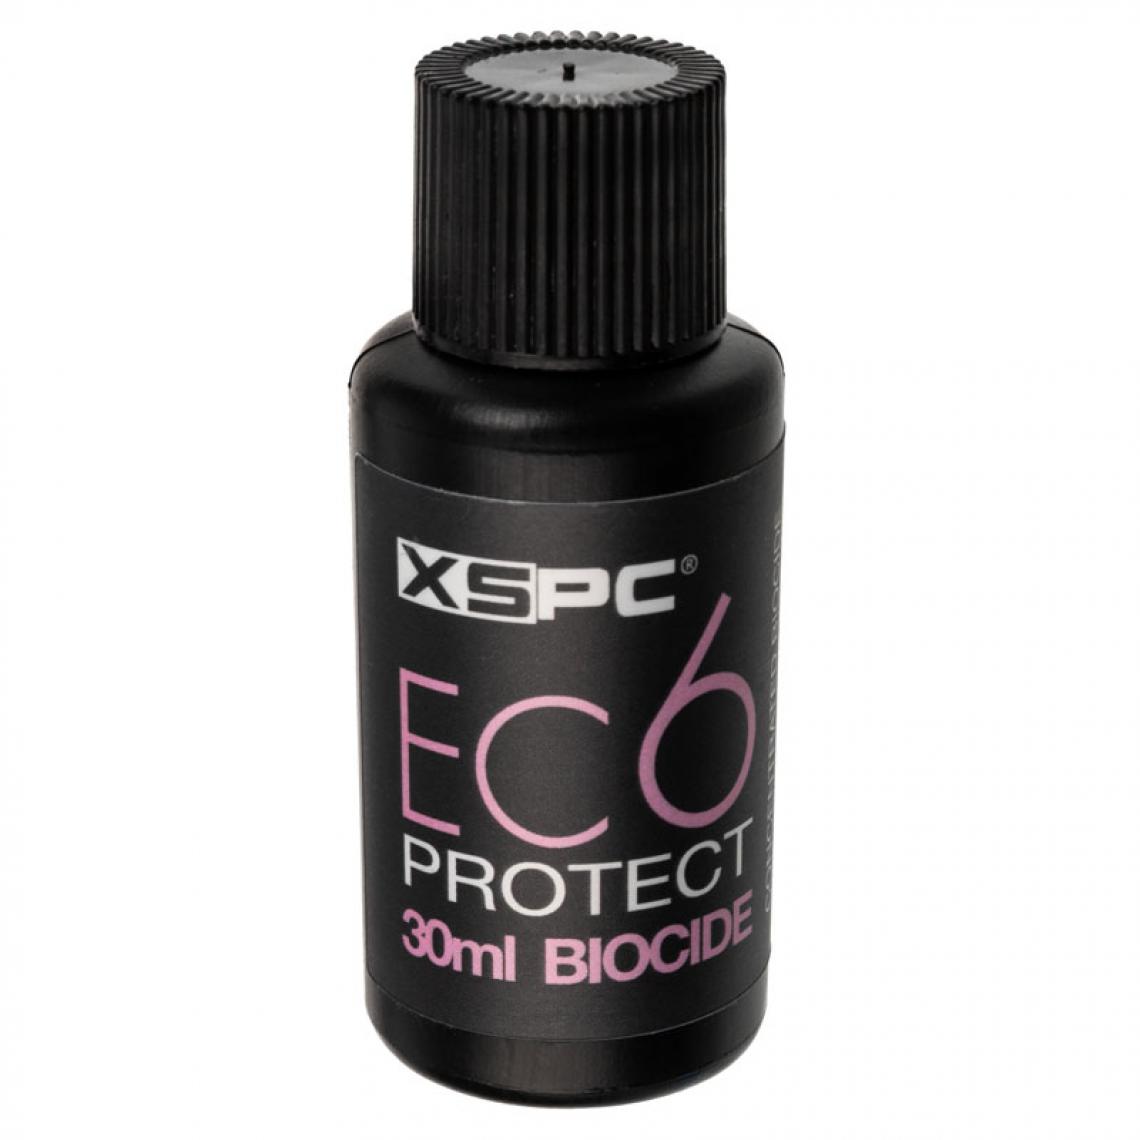 Xspc - EC6 Protect - Biocide - Ventirad carte graphique